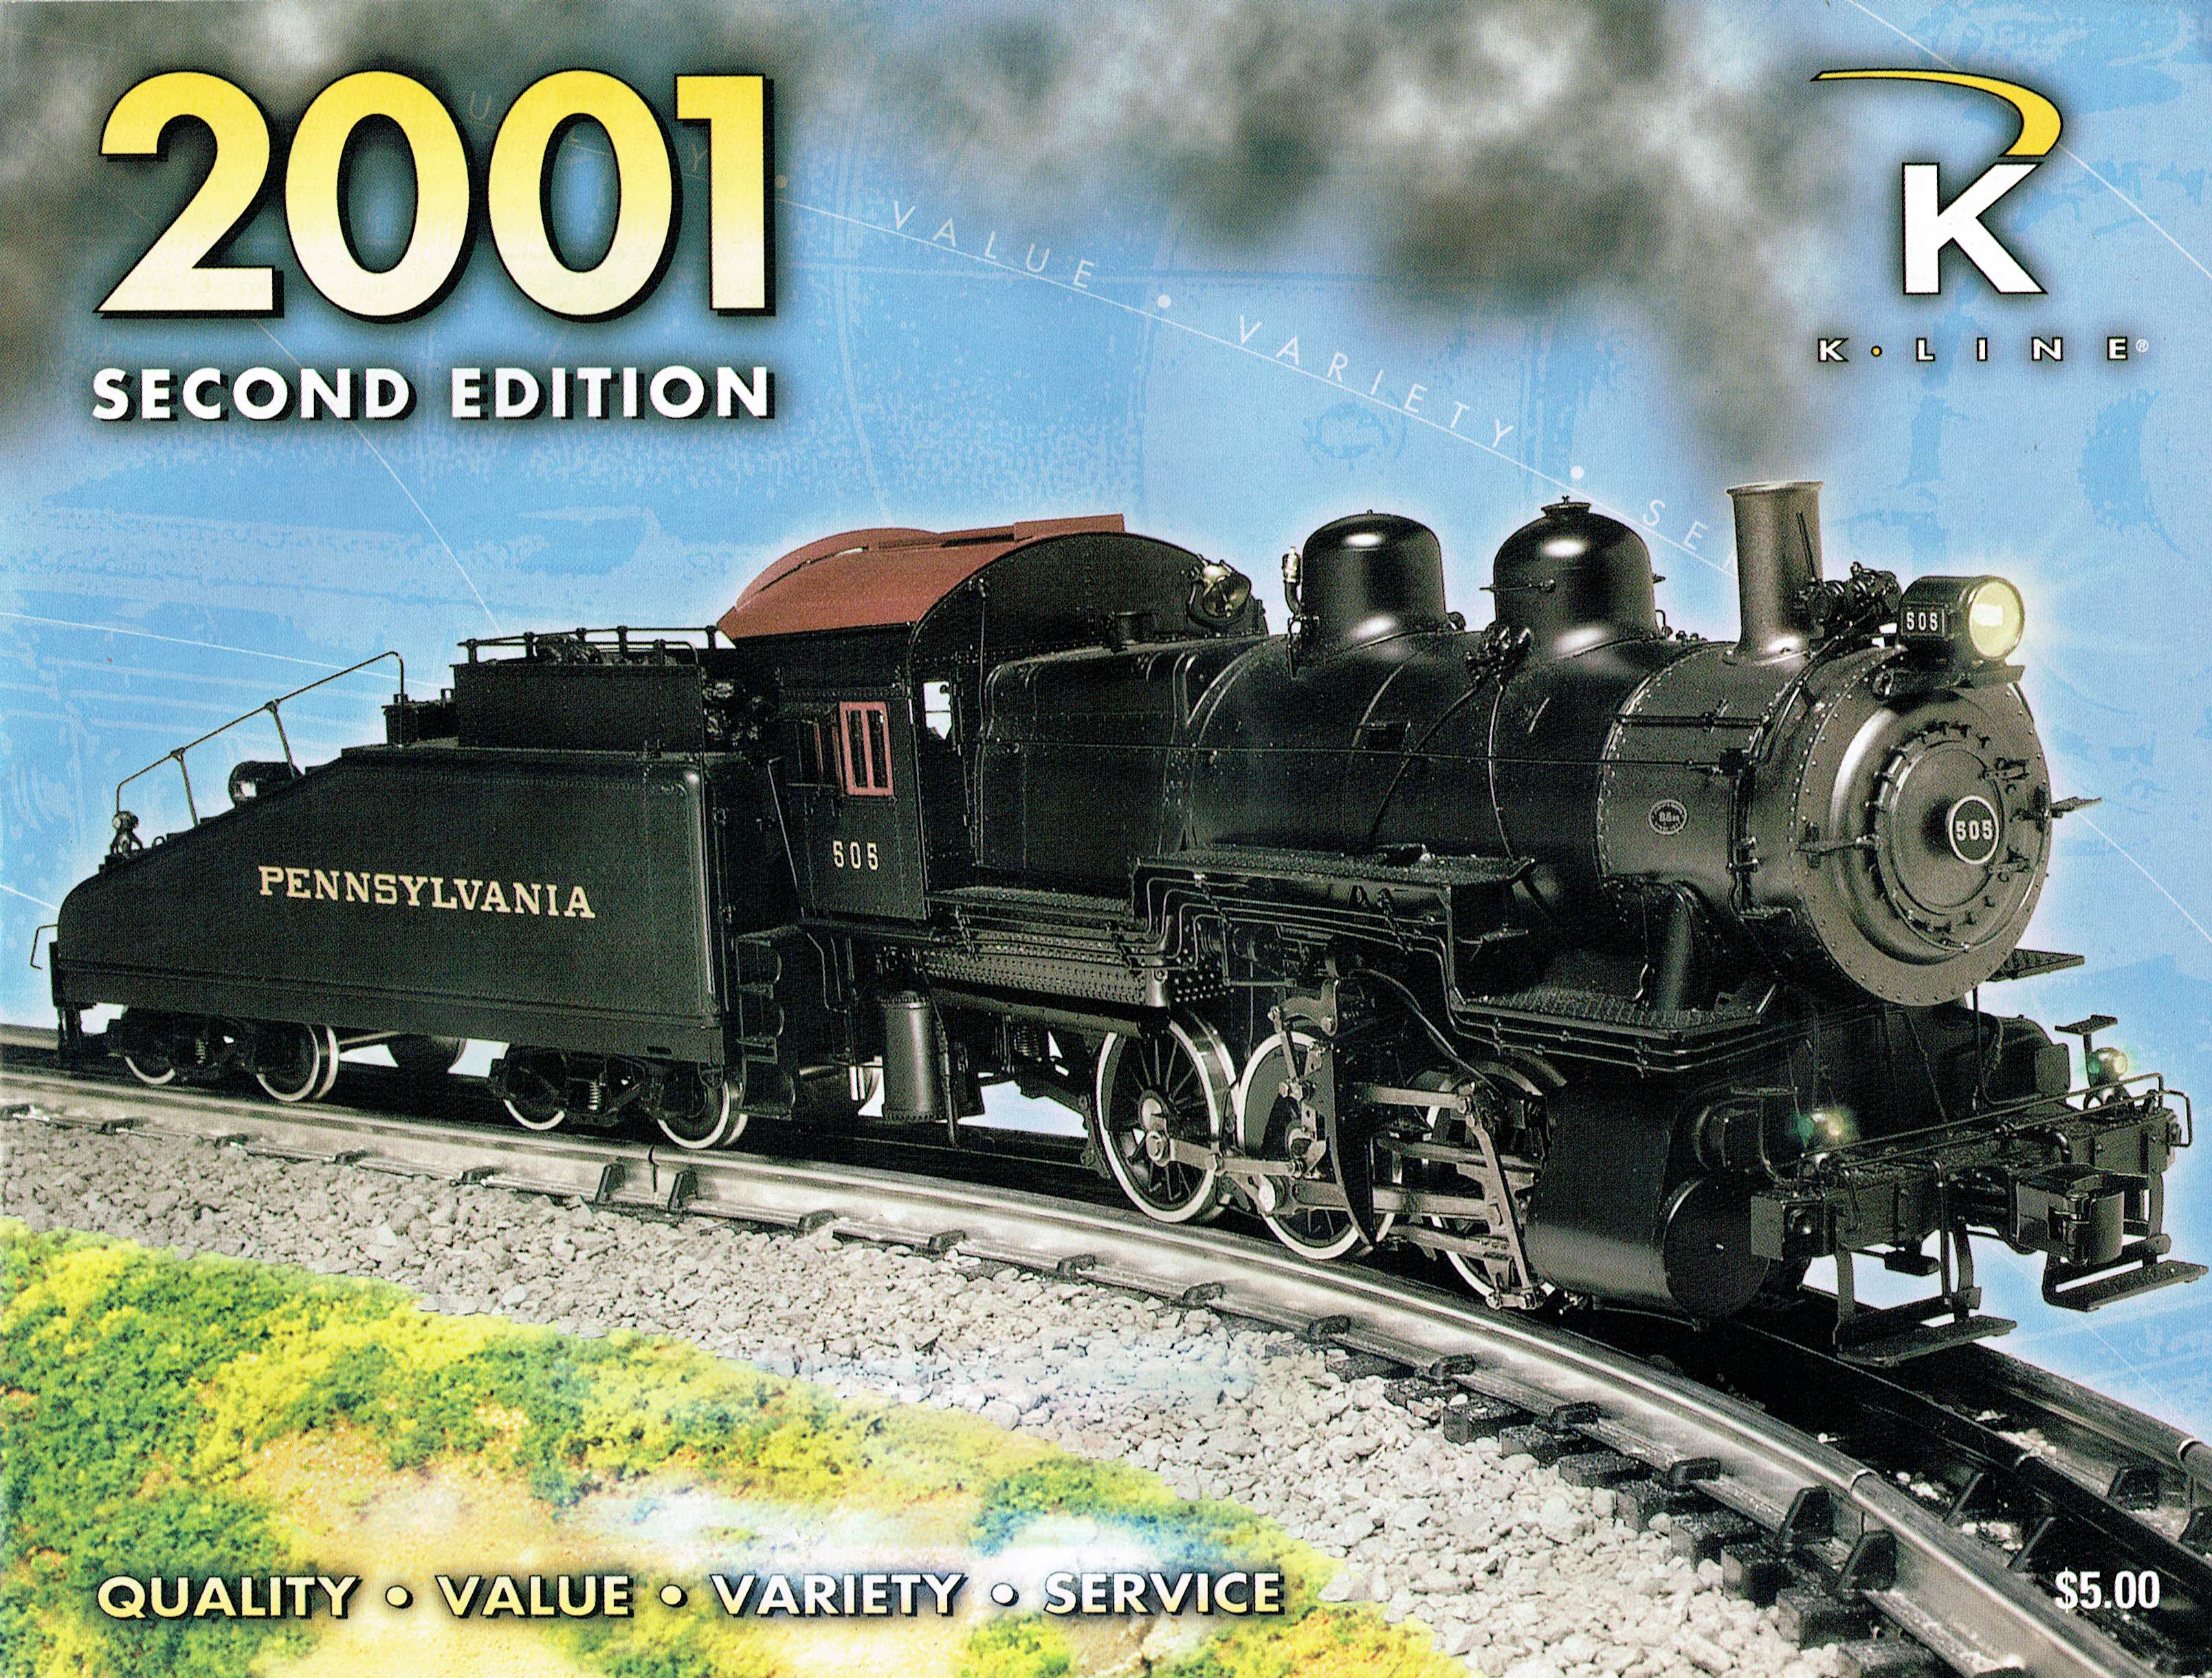 K-Line 2001 Second Edition Catalog image